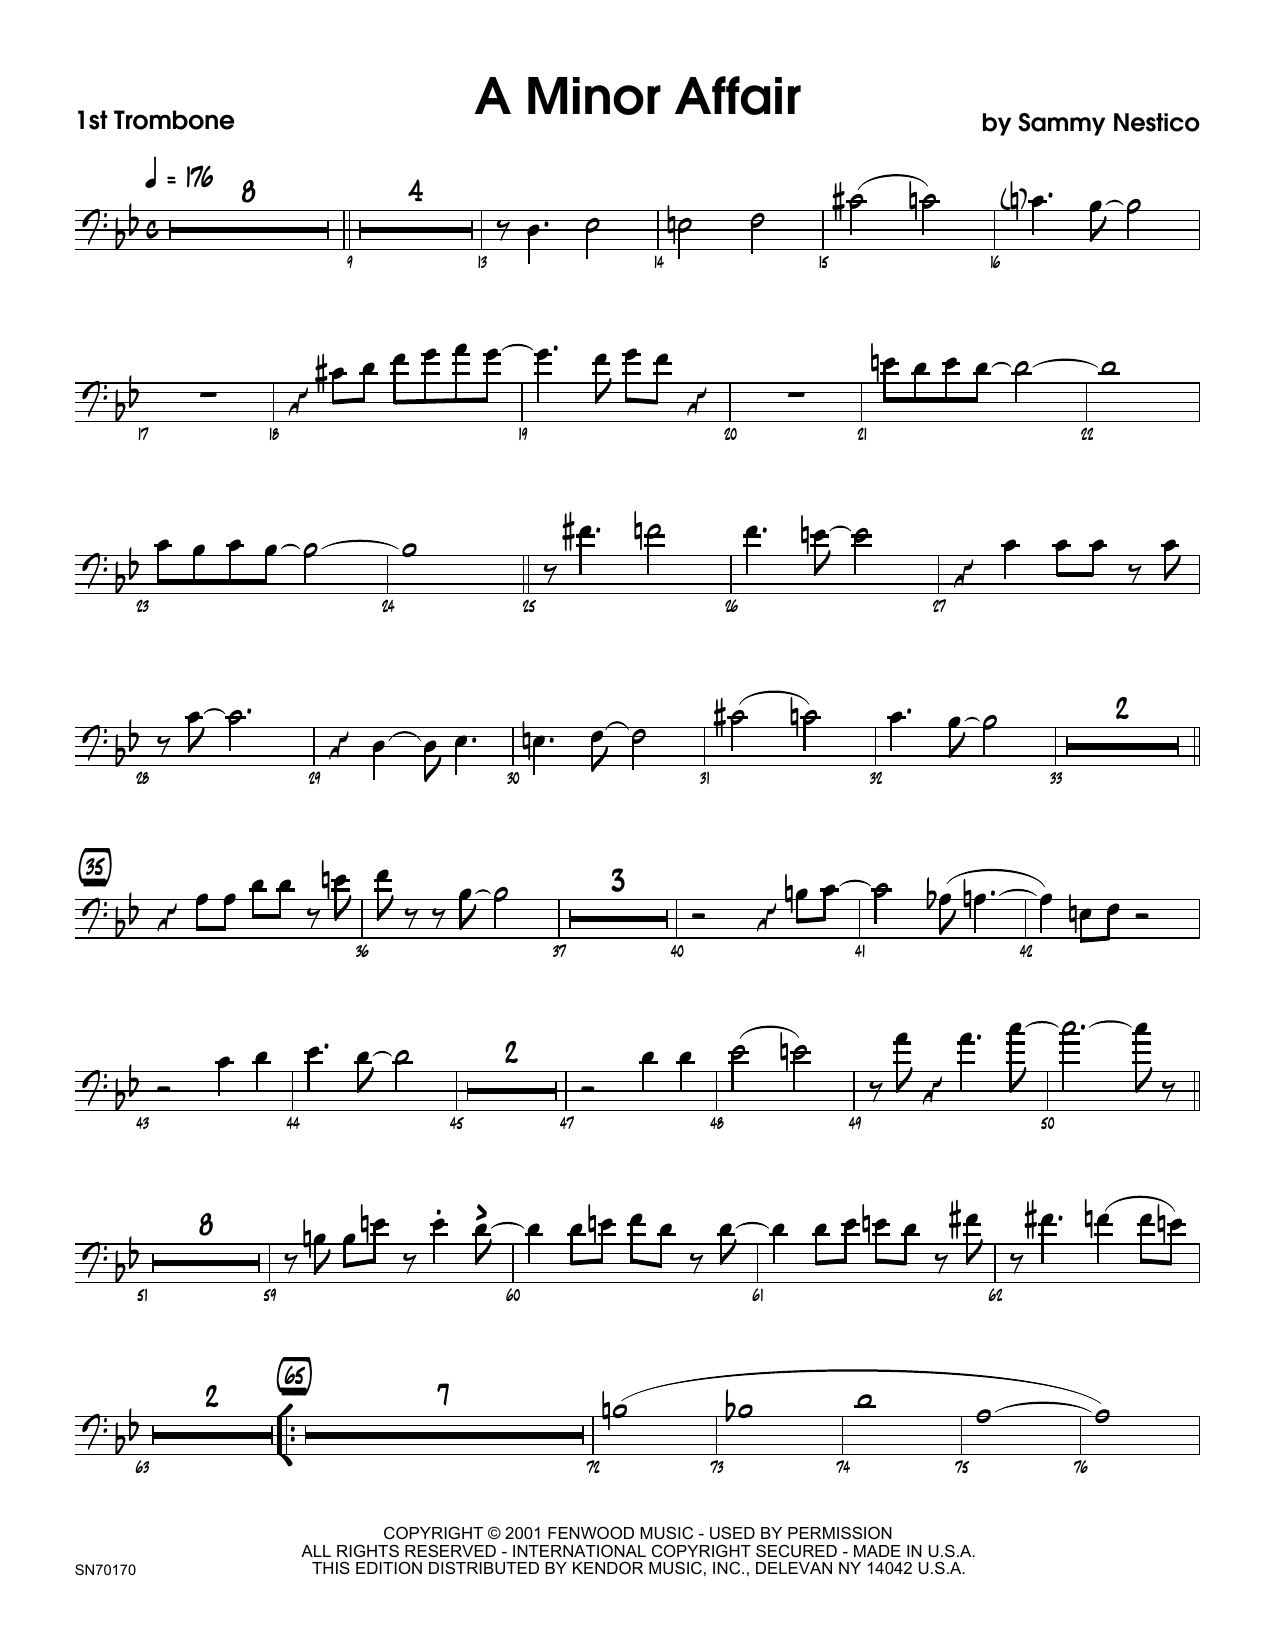 Download Sammy Nestico A Minor Affair - 1st Trombone Sheet Music